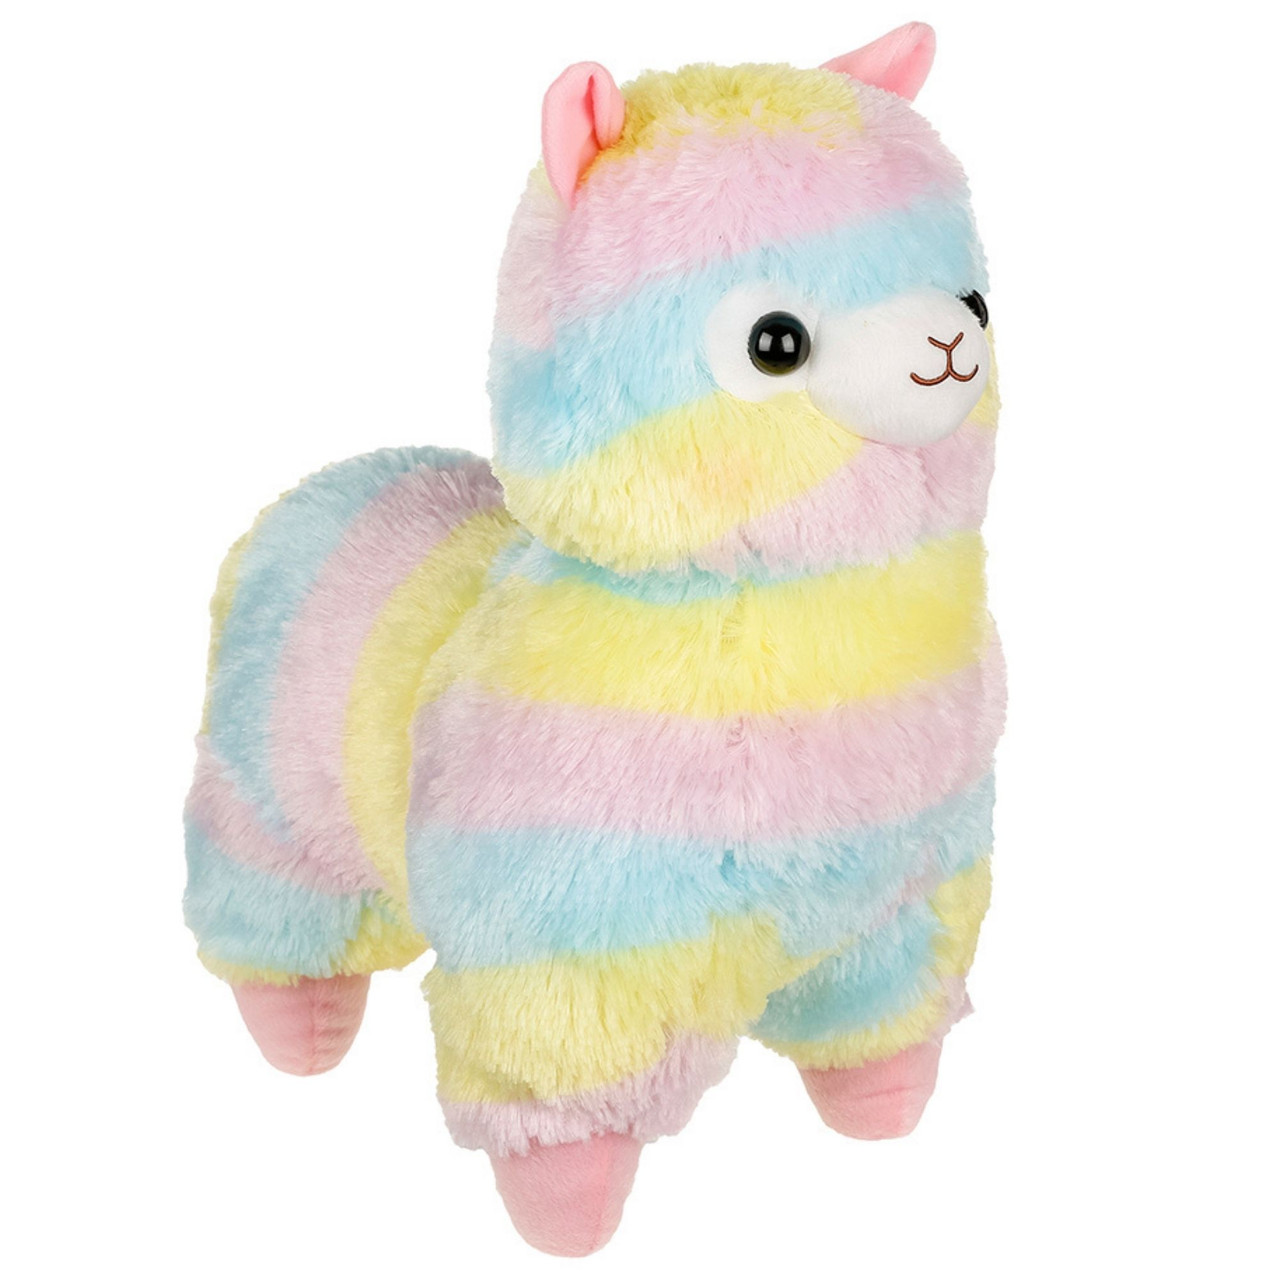 Plush toy of an alpaca with rainbow stripes